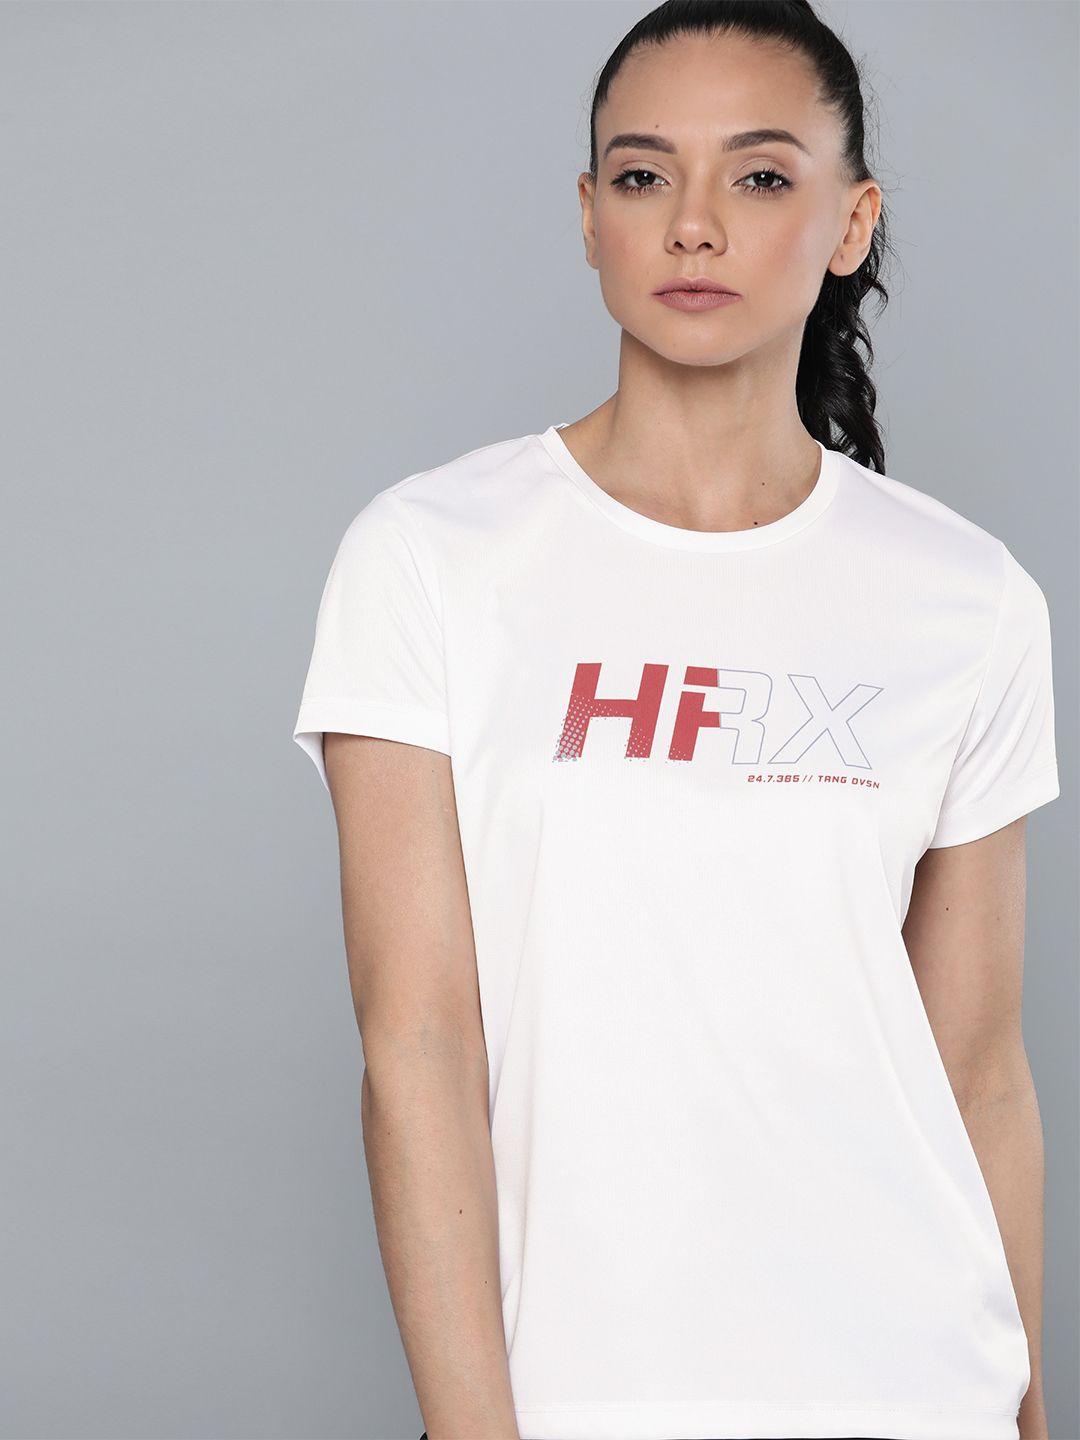 hrx by hrithik roshan women bright white solid rapid-dry antimicrobial training tshirt